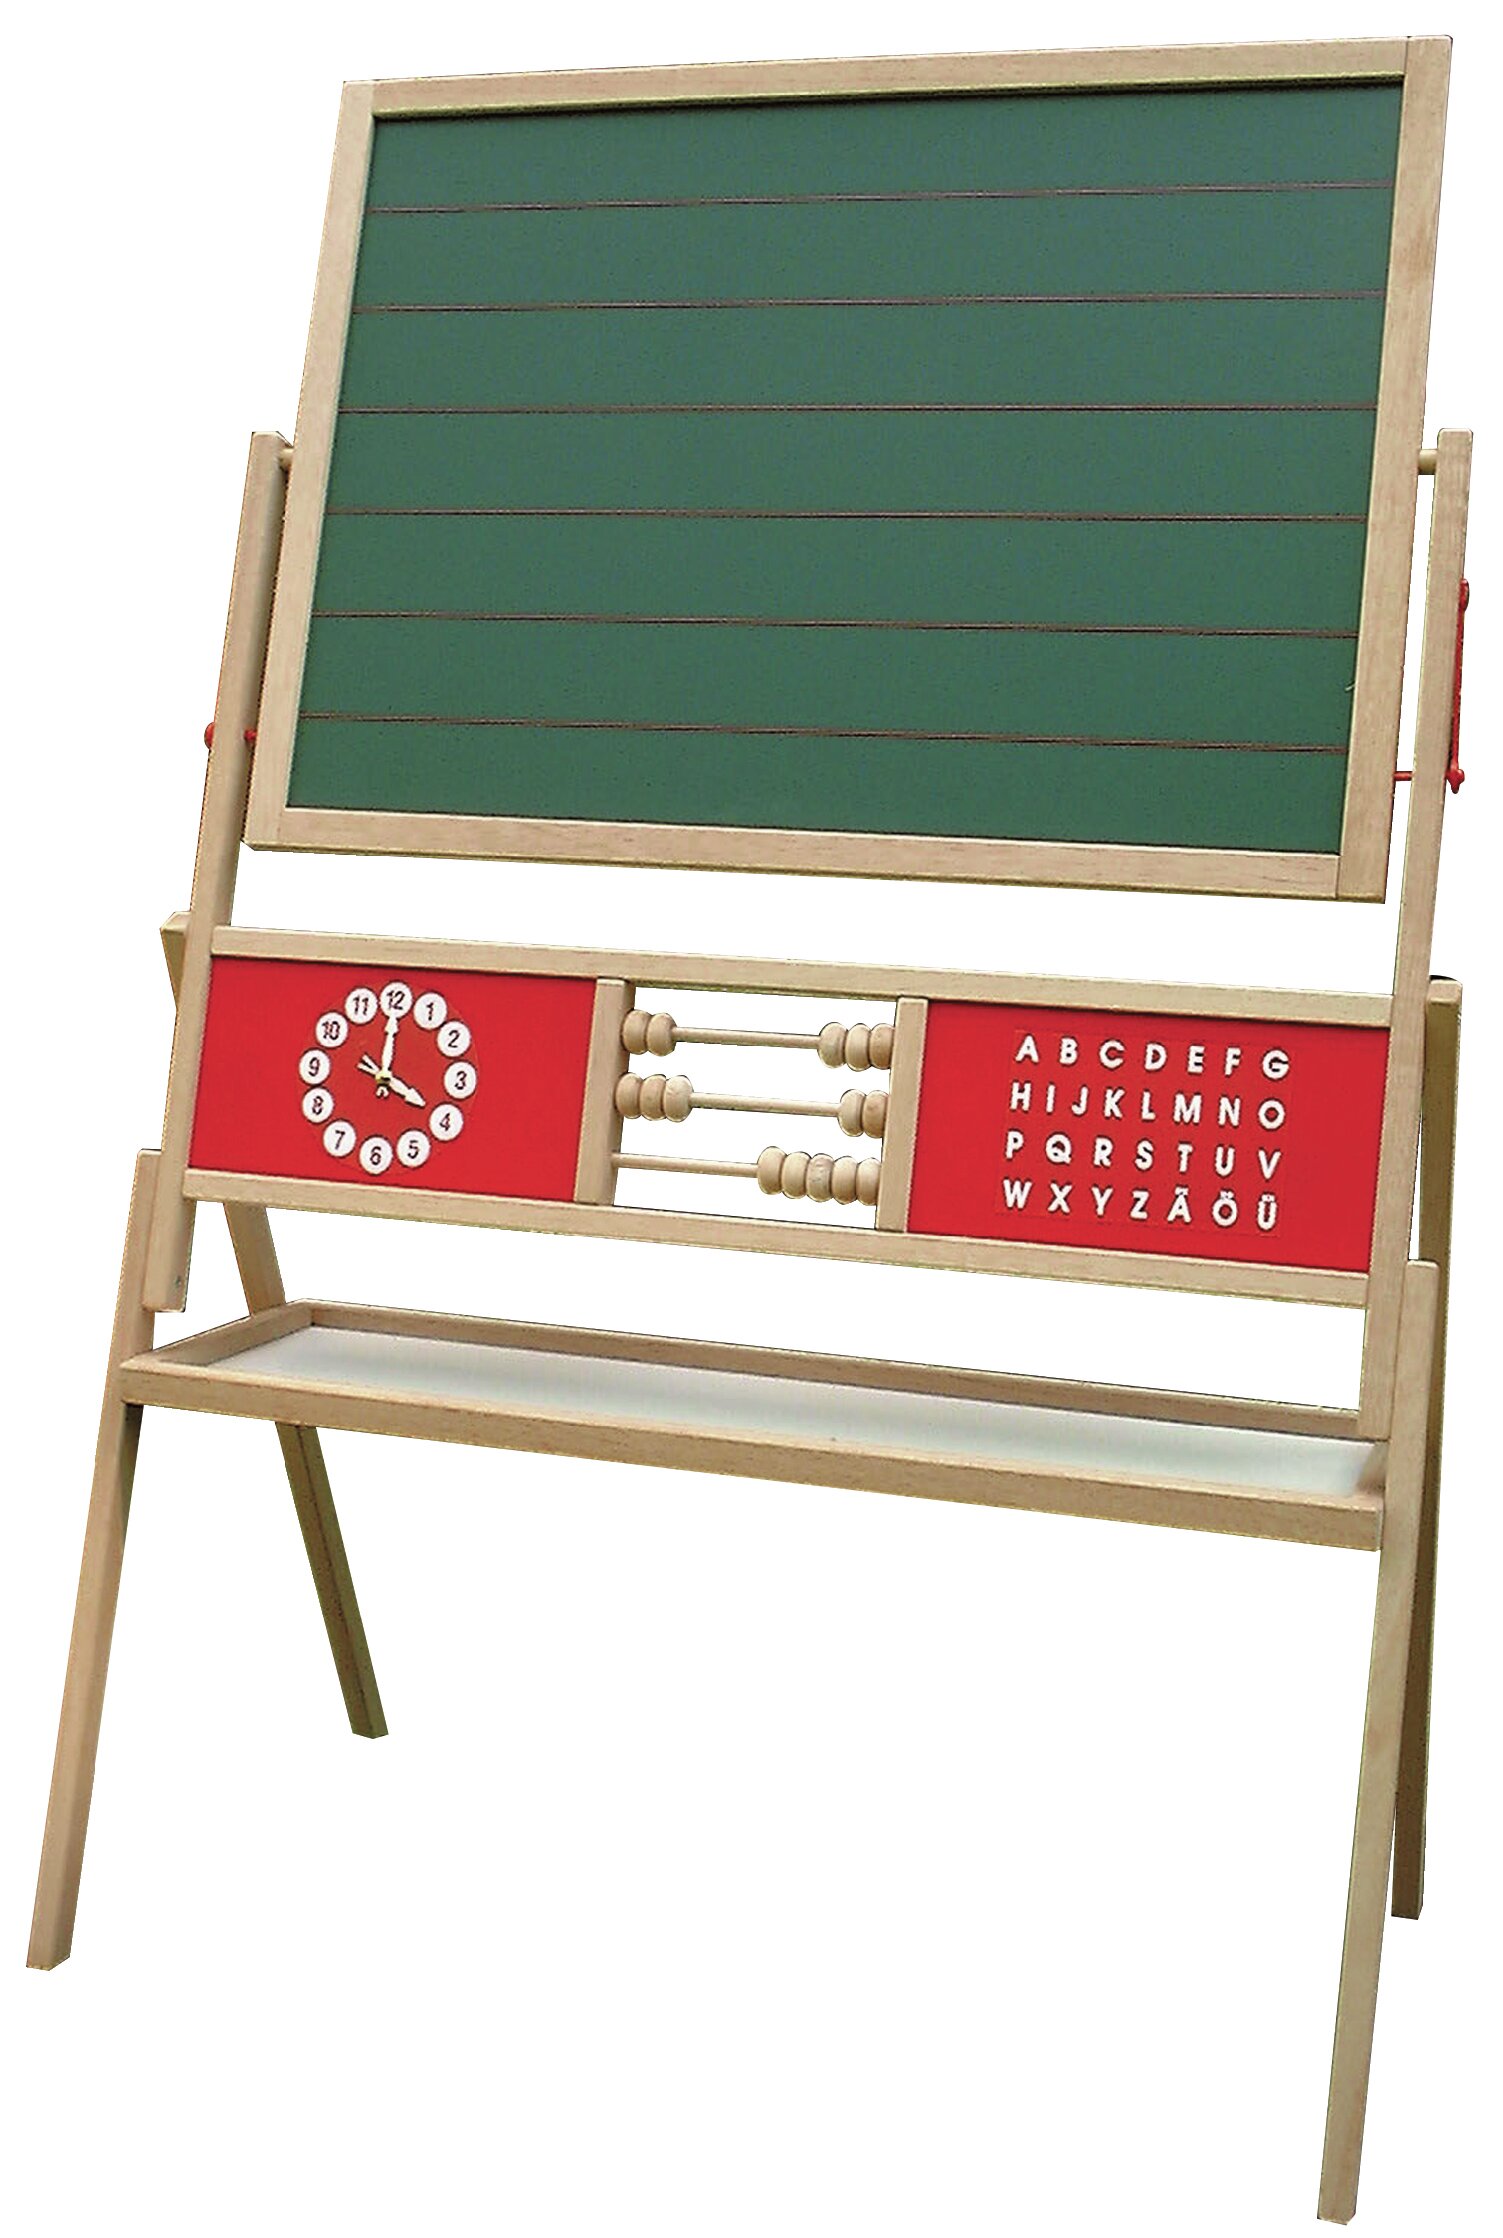 Standtafel Kinder doppelseitig Echtholz Spiel-Lern-Kreidetafel Magnettafel Zählr 